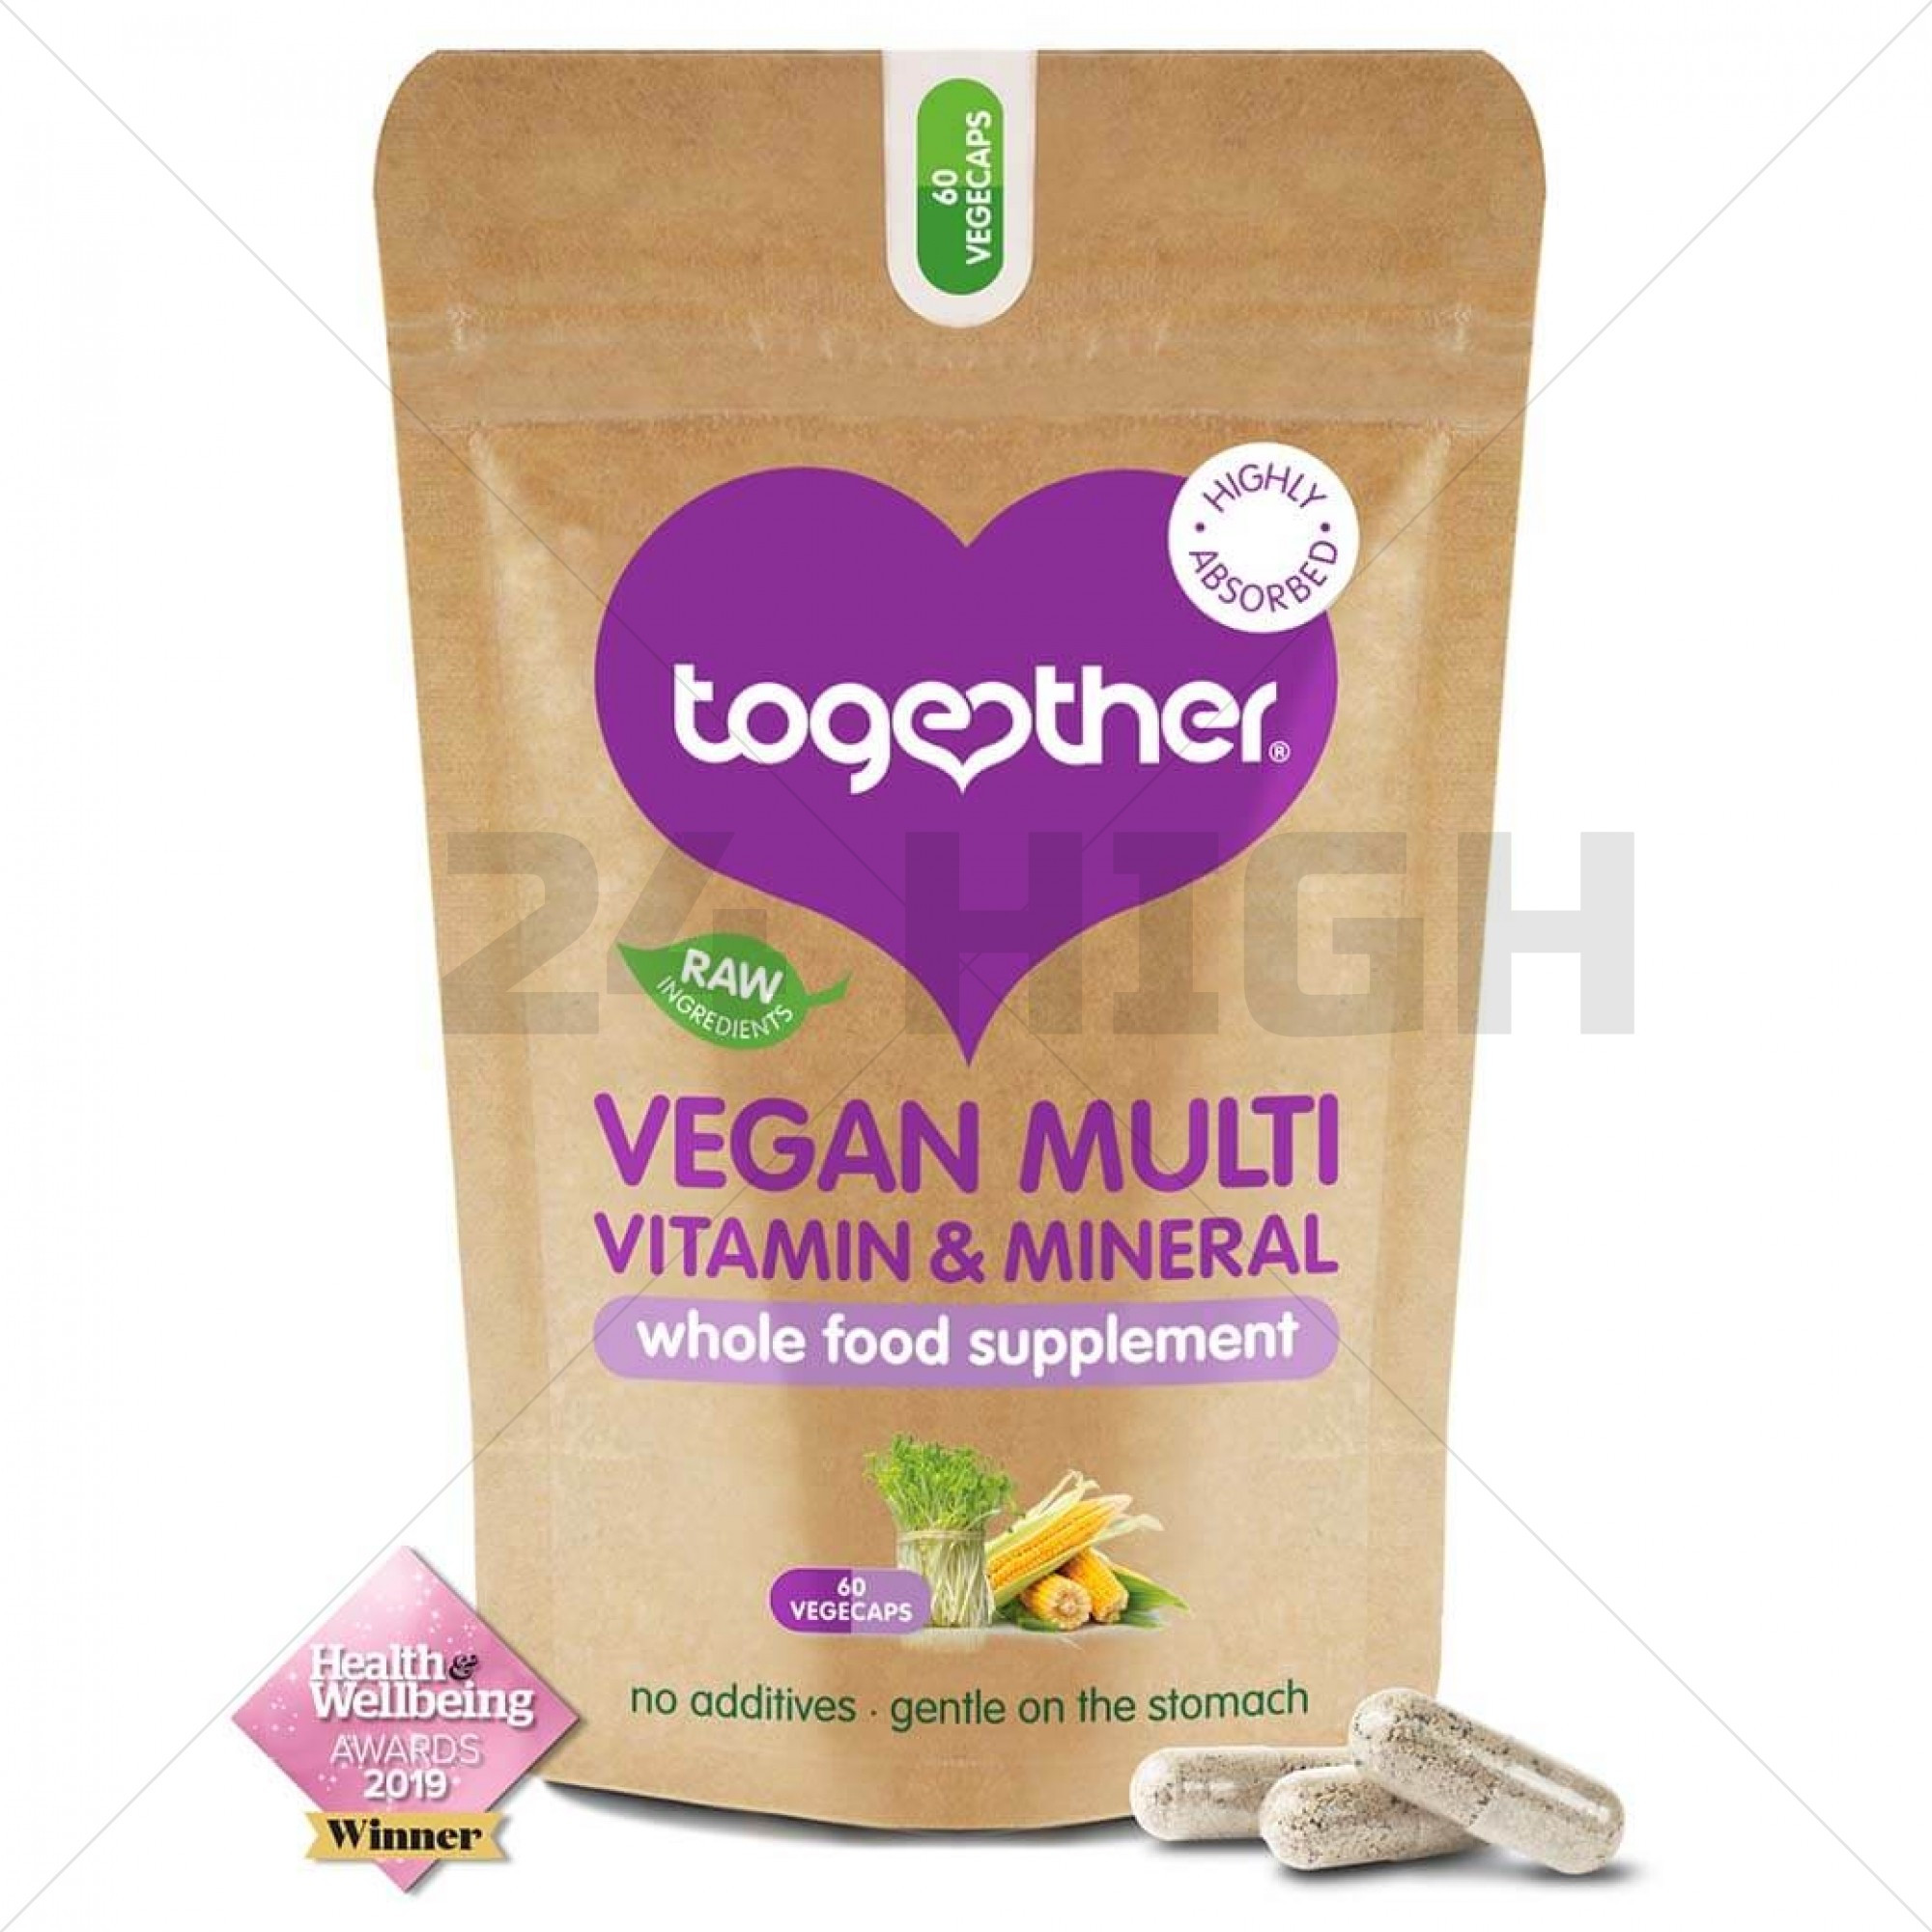 Vegan Multi Vitamin & Mineral - Together